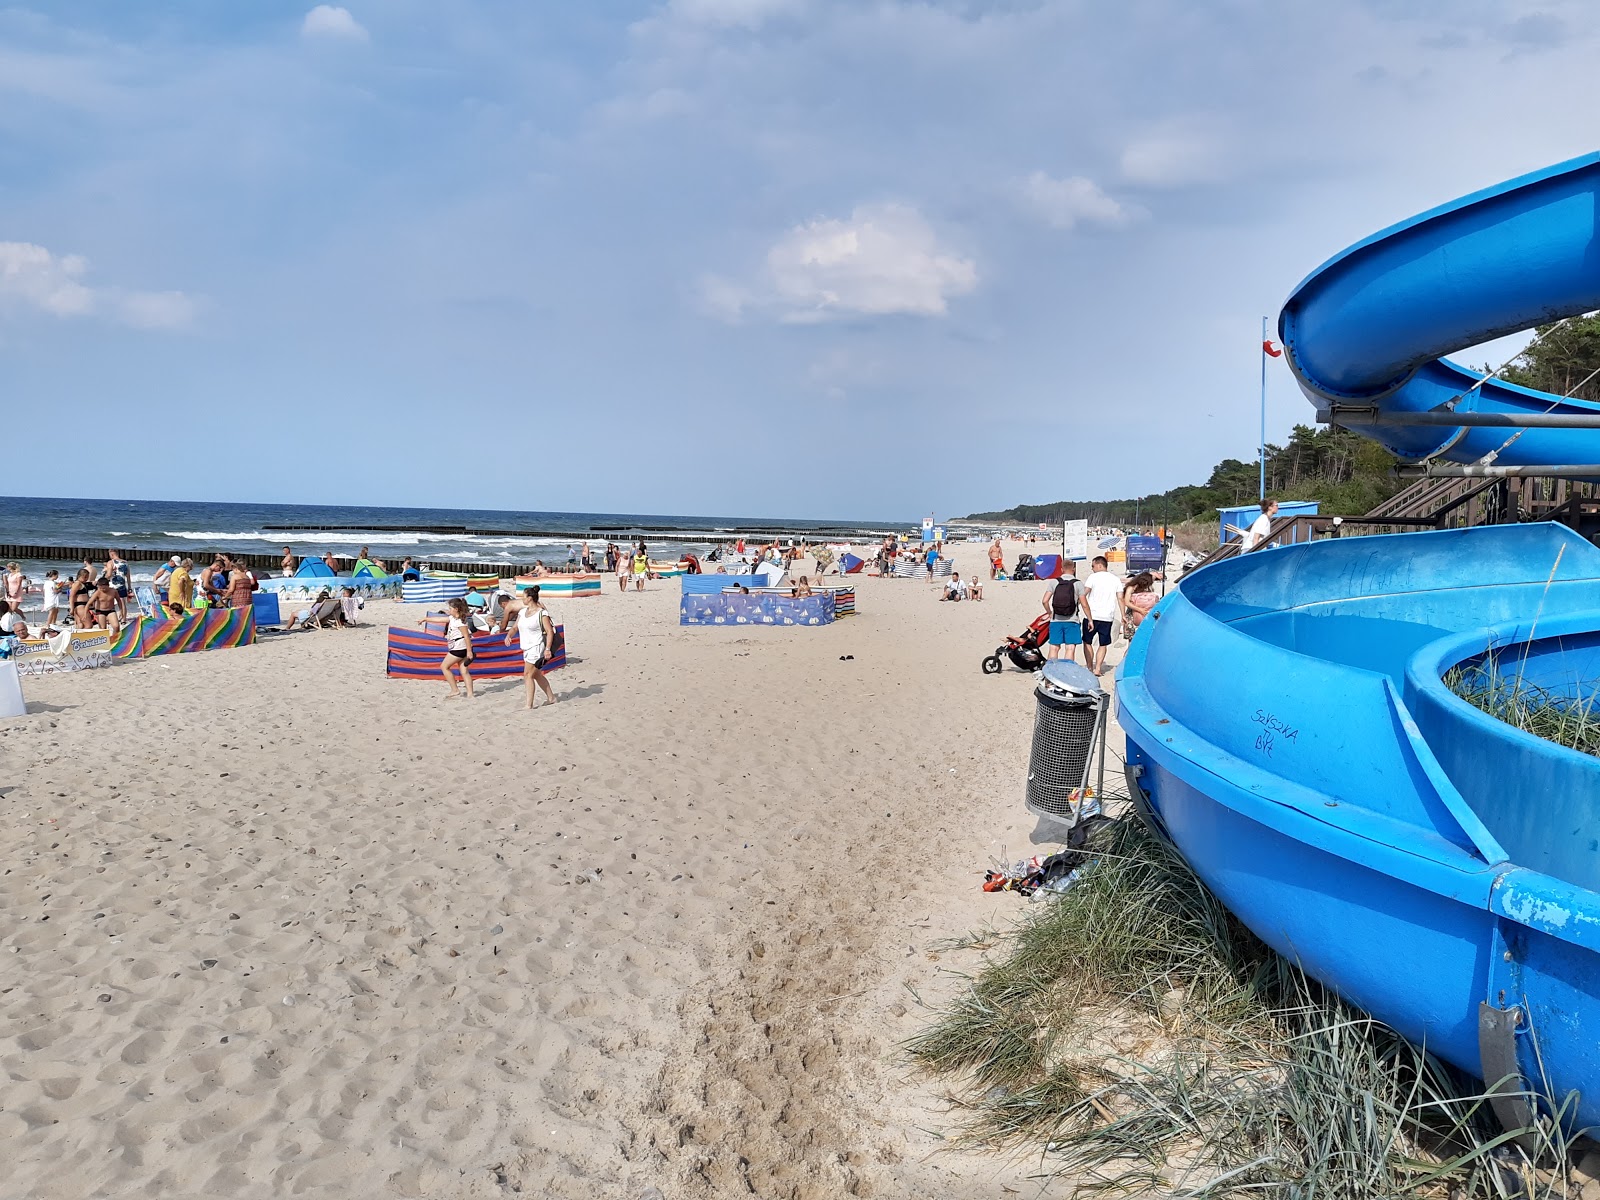 Strzezona Beach的照片 带有碧绿色纯水表面